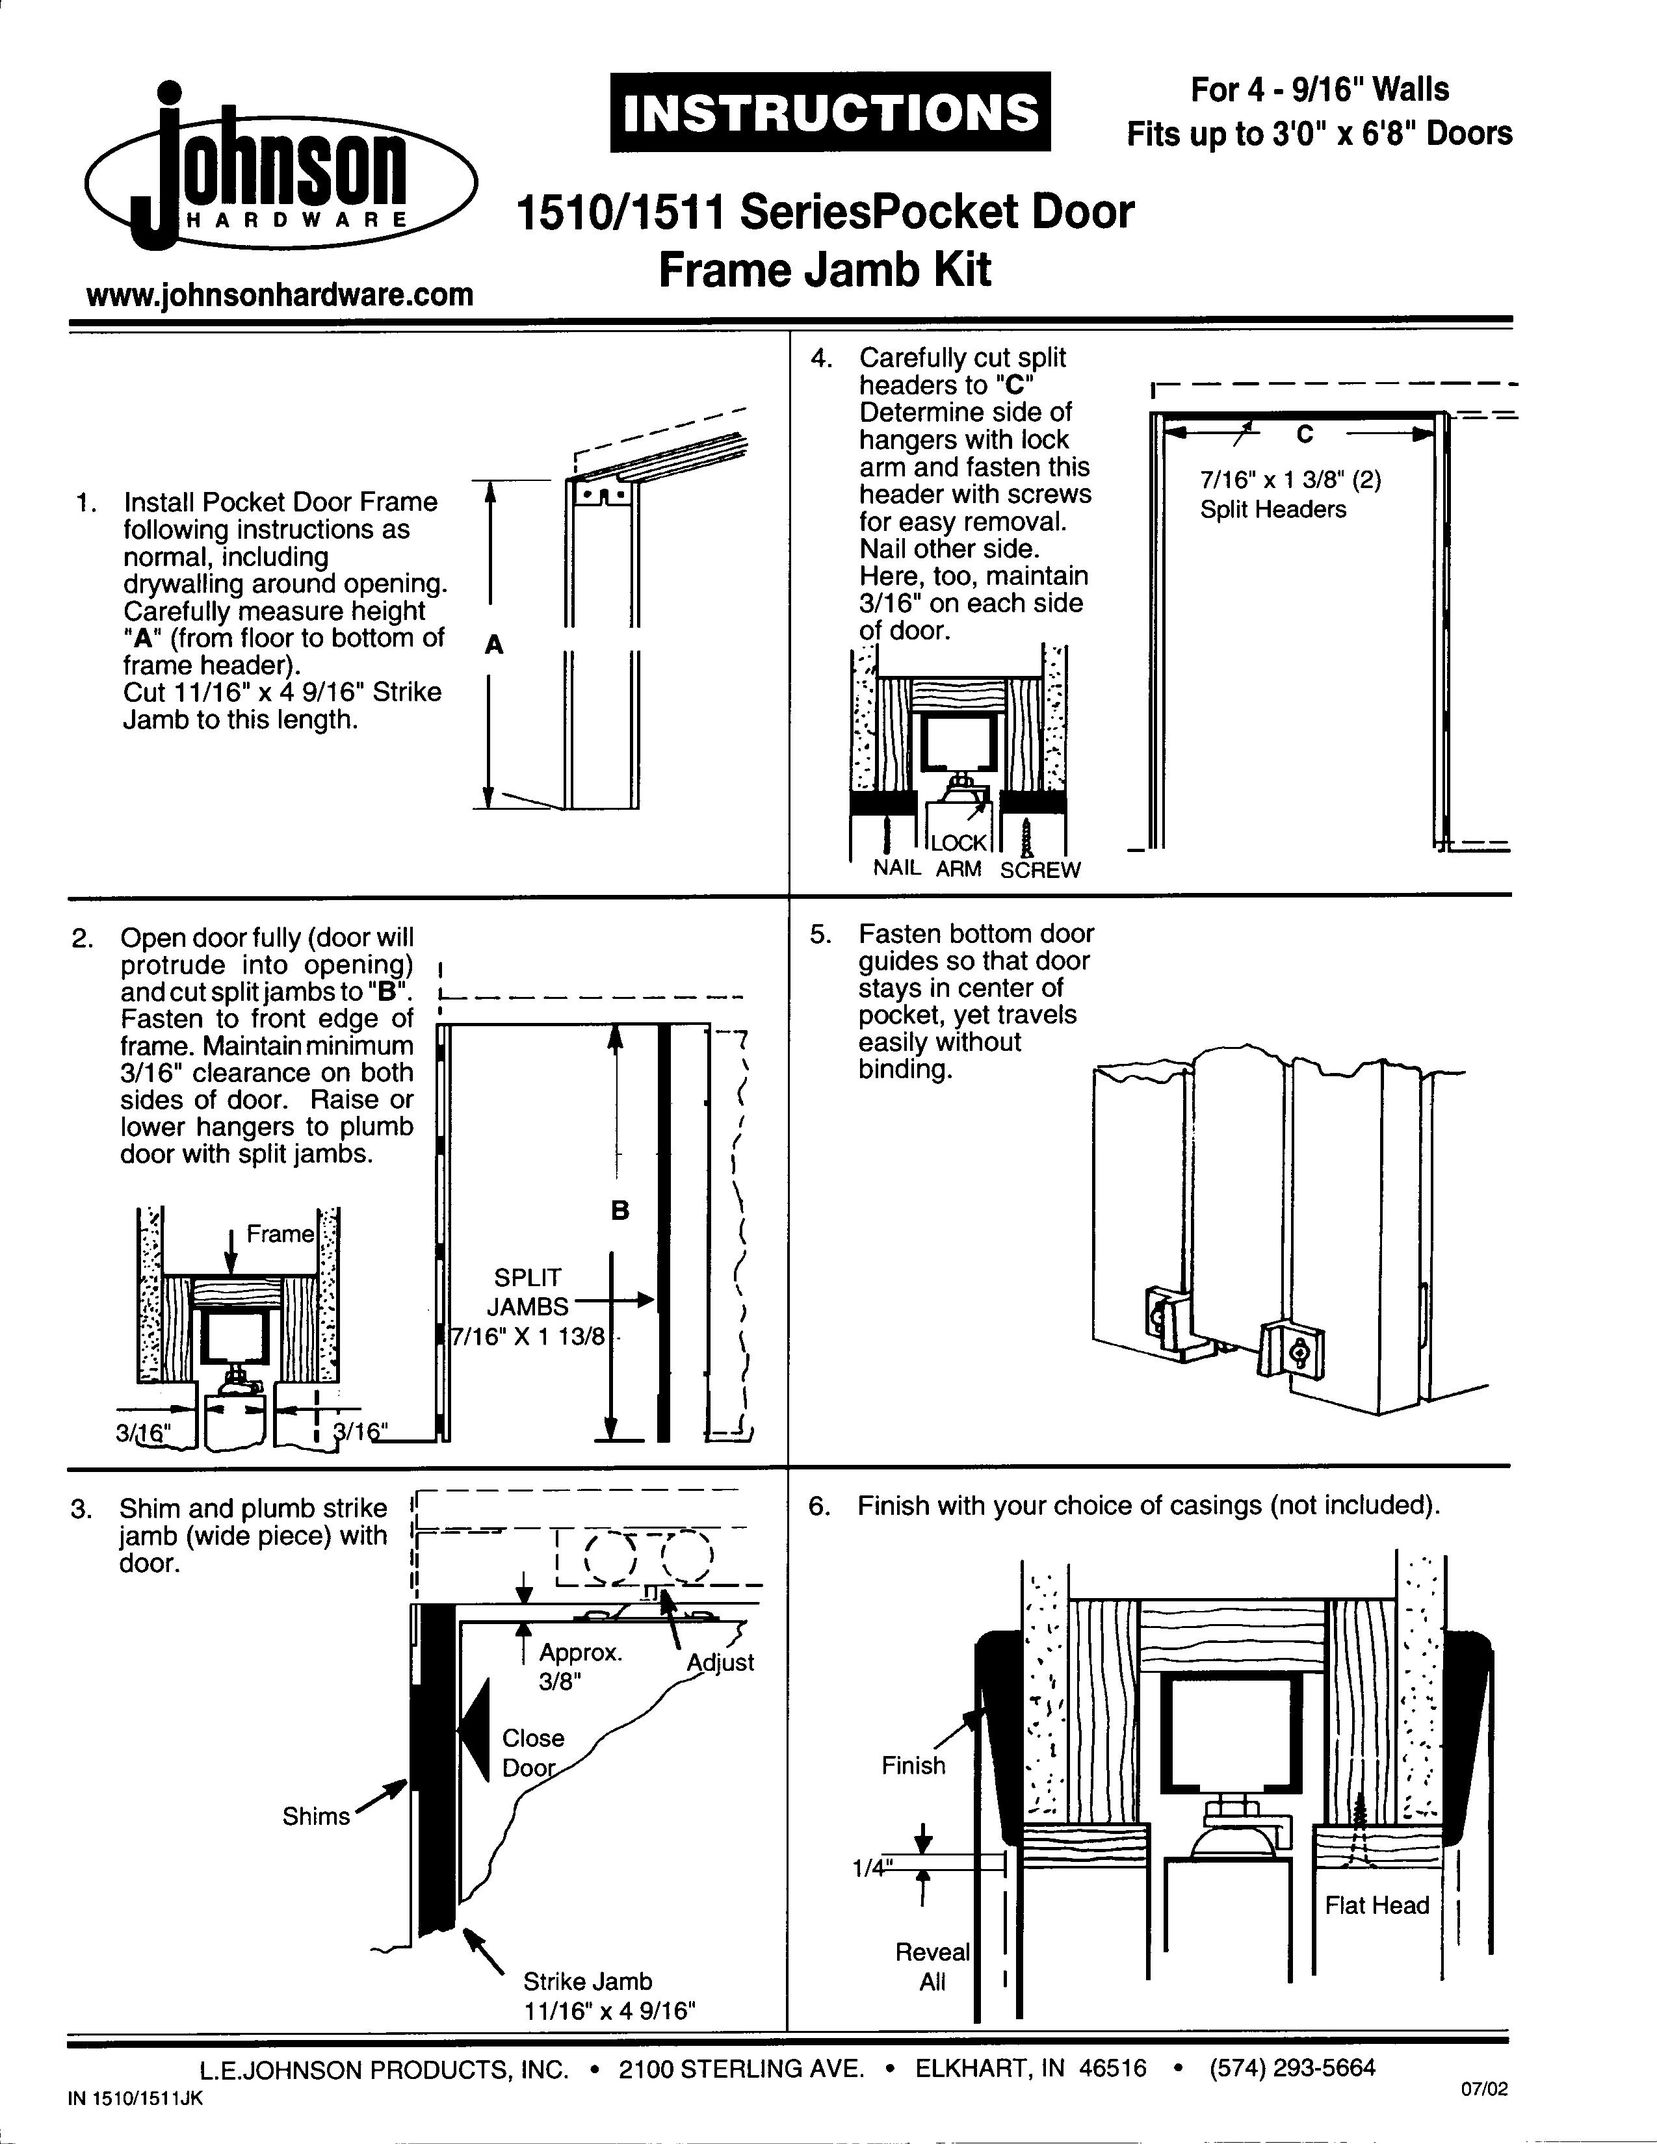 Johnson Hardware 1510 Series Door User Manual